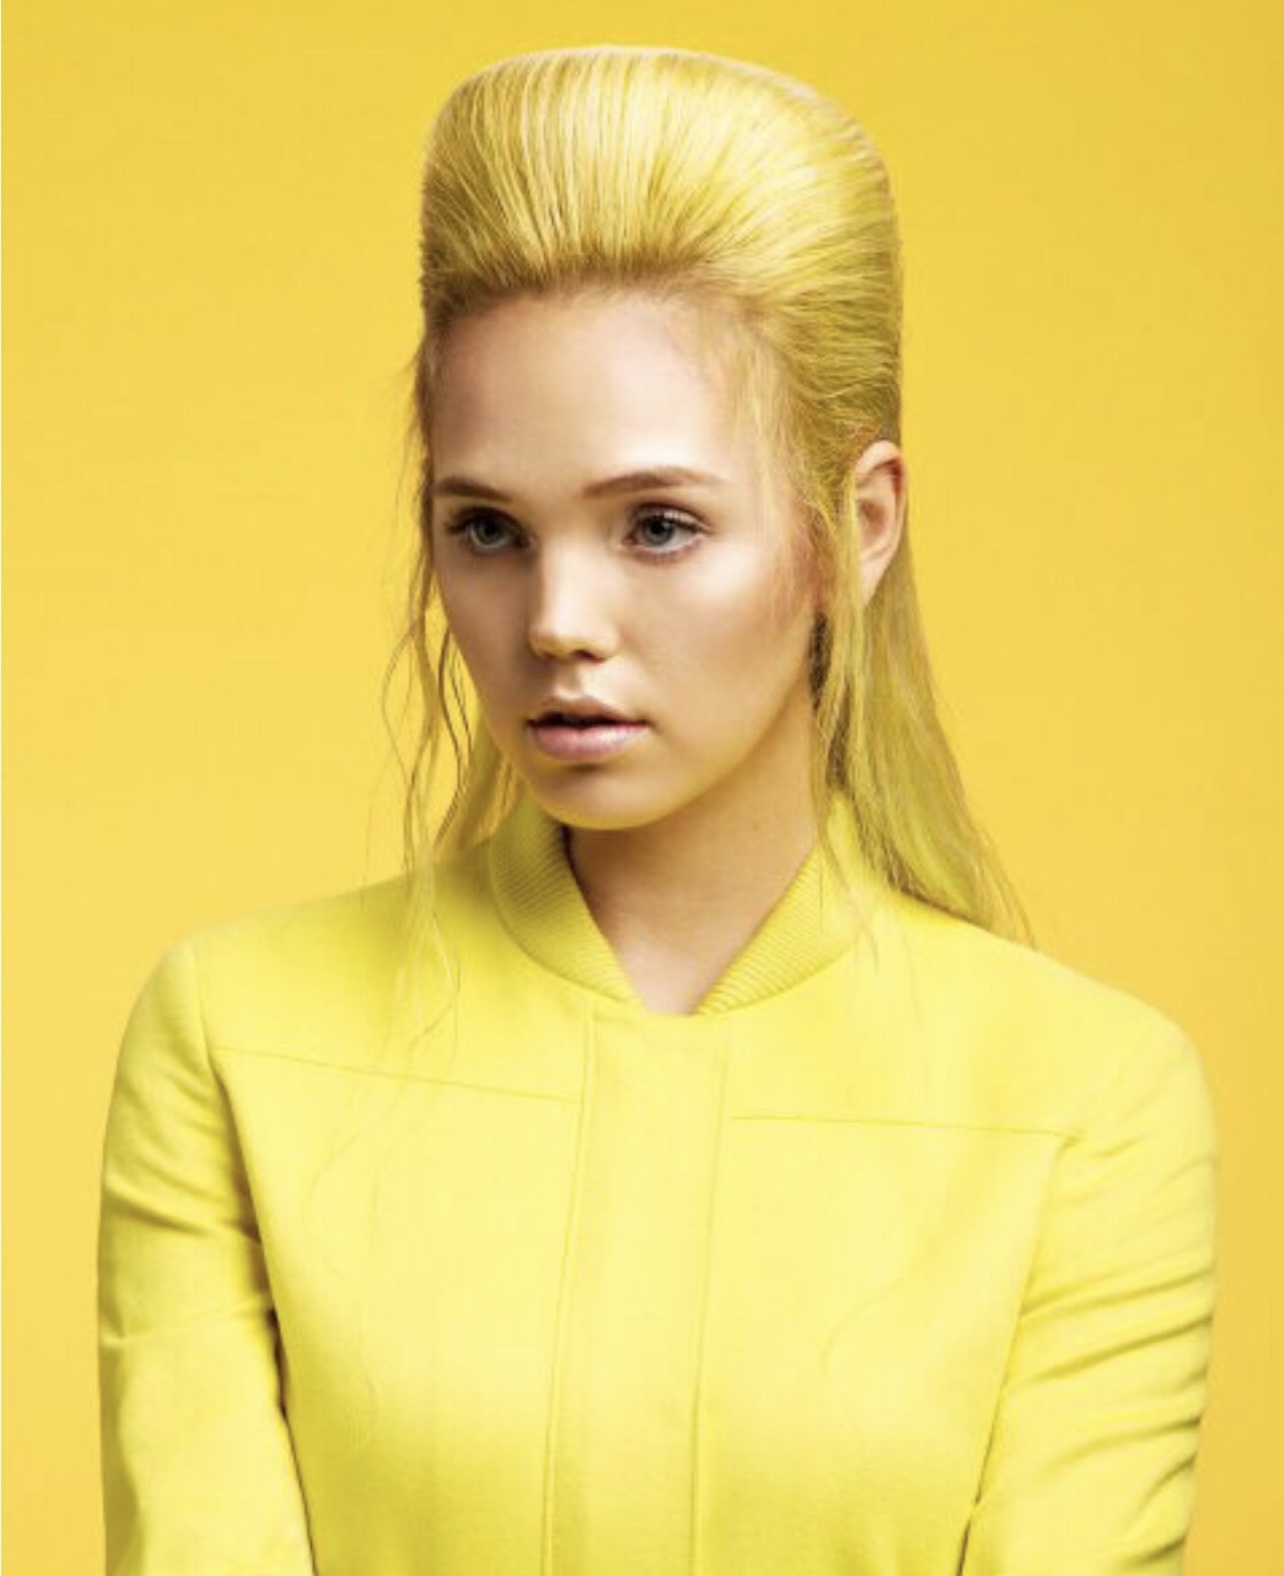 Woman with stylish, yellow haircut set on a yellow background